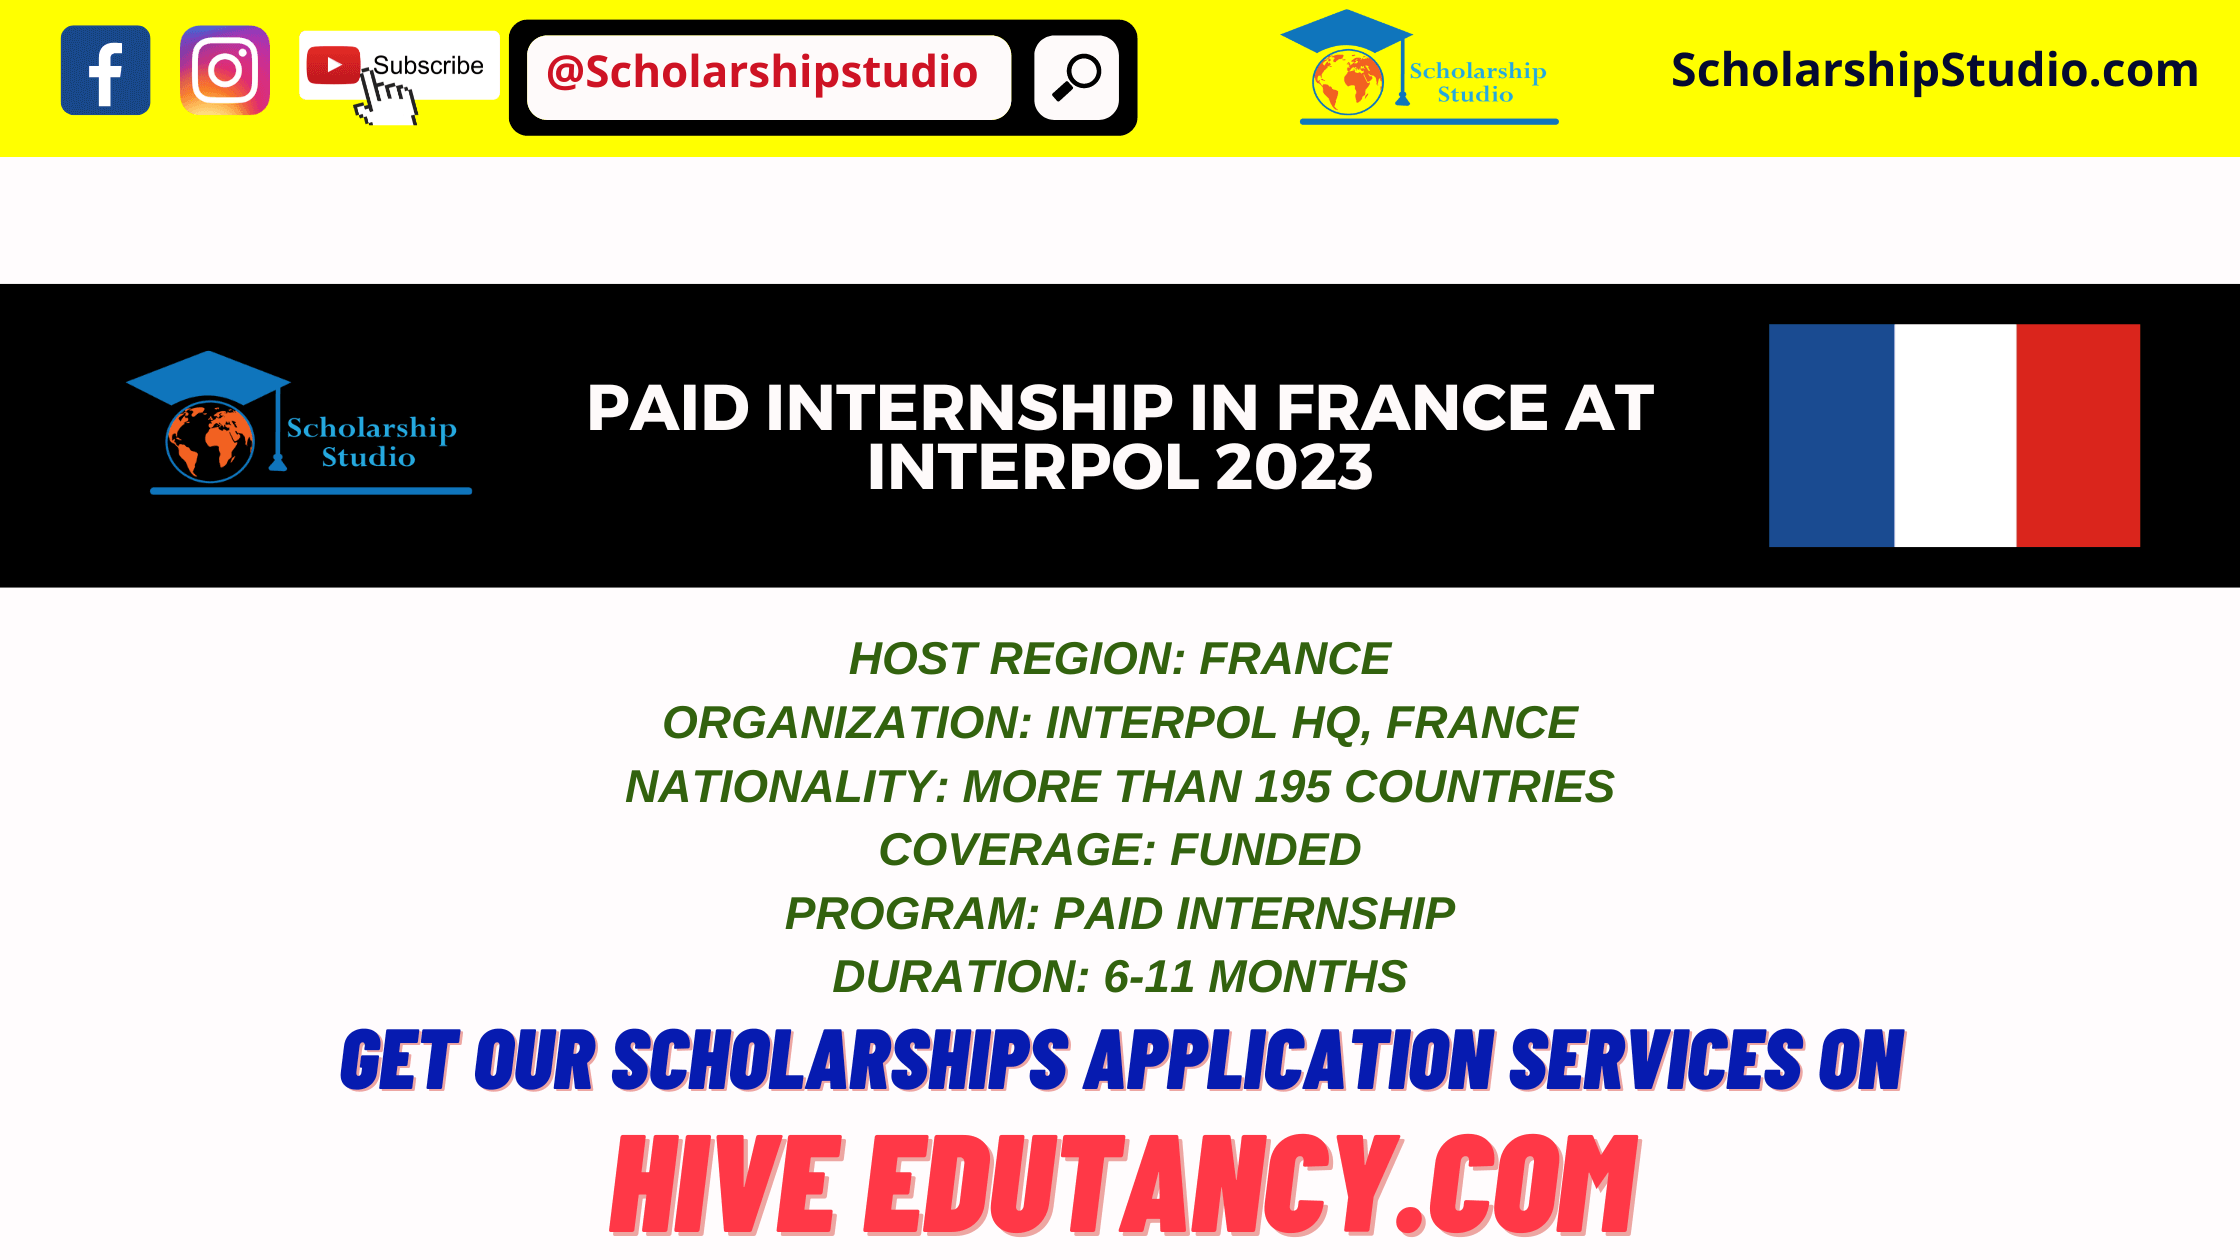 Paid Internship in France at Interpol 2023 Scholarship studio